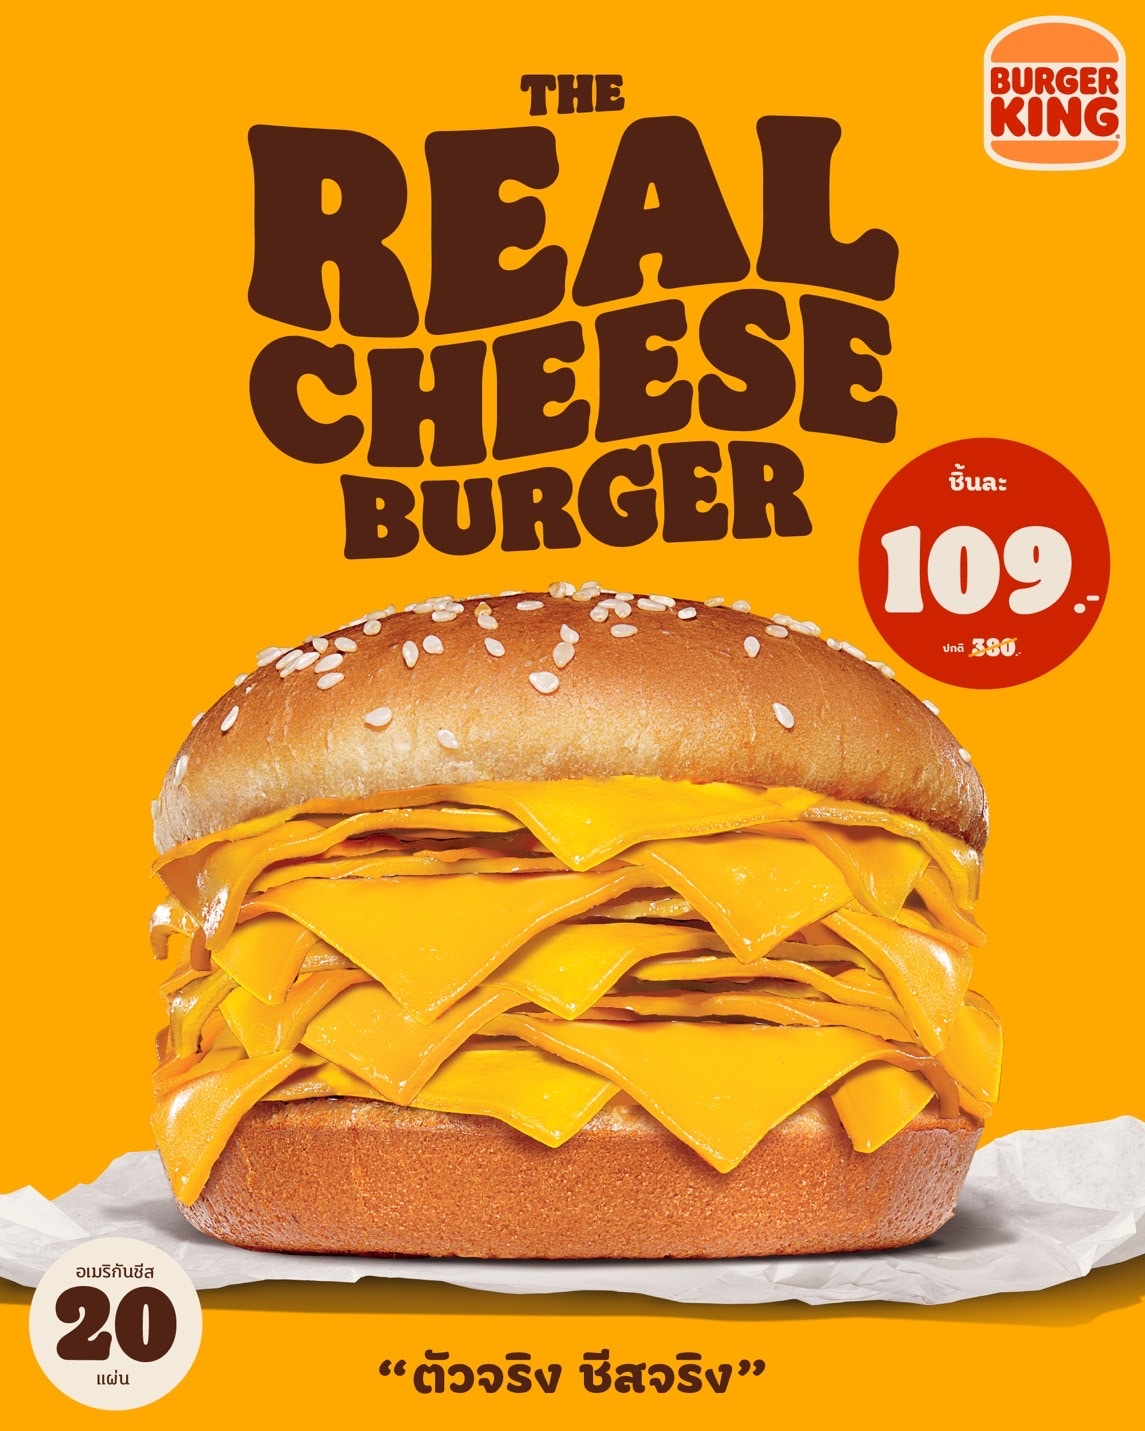 Burger King’s New Cheeseburger May Be Meat-Free, But Its Water Usage ...